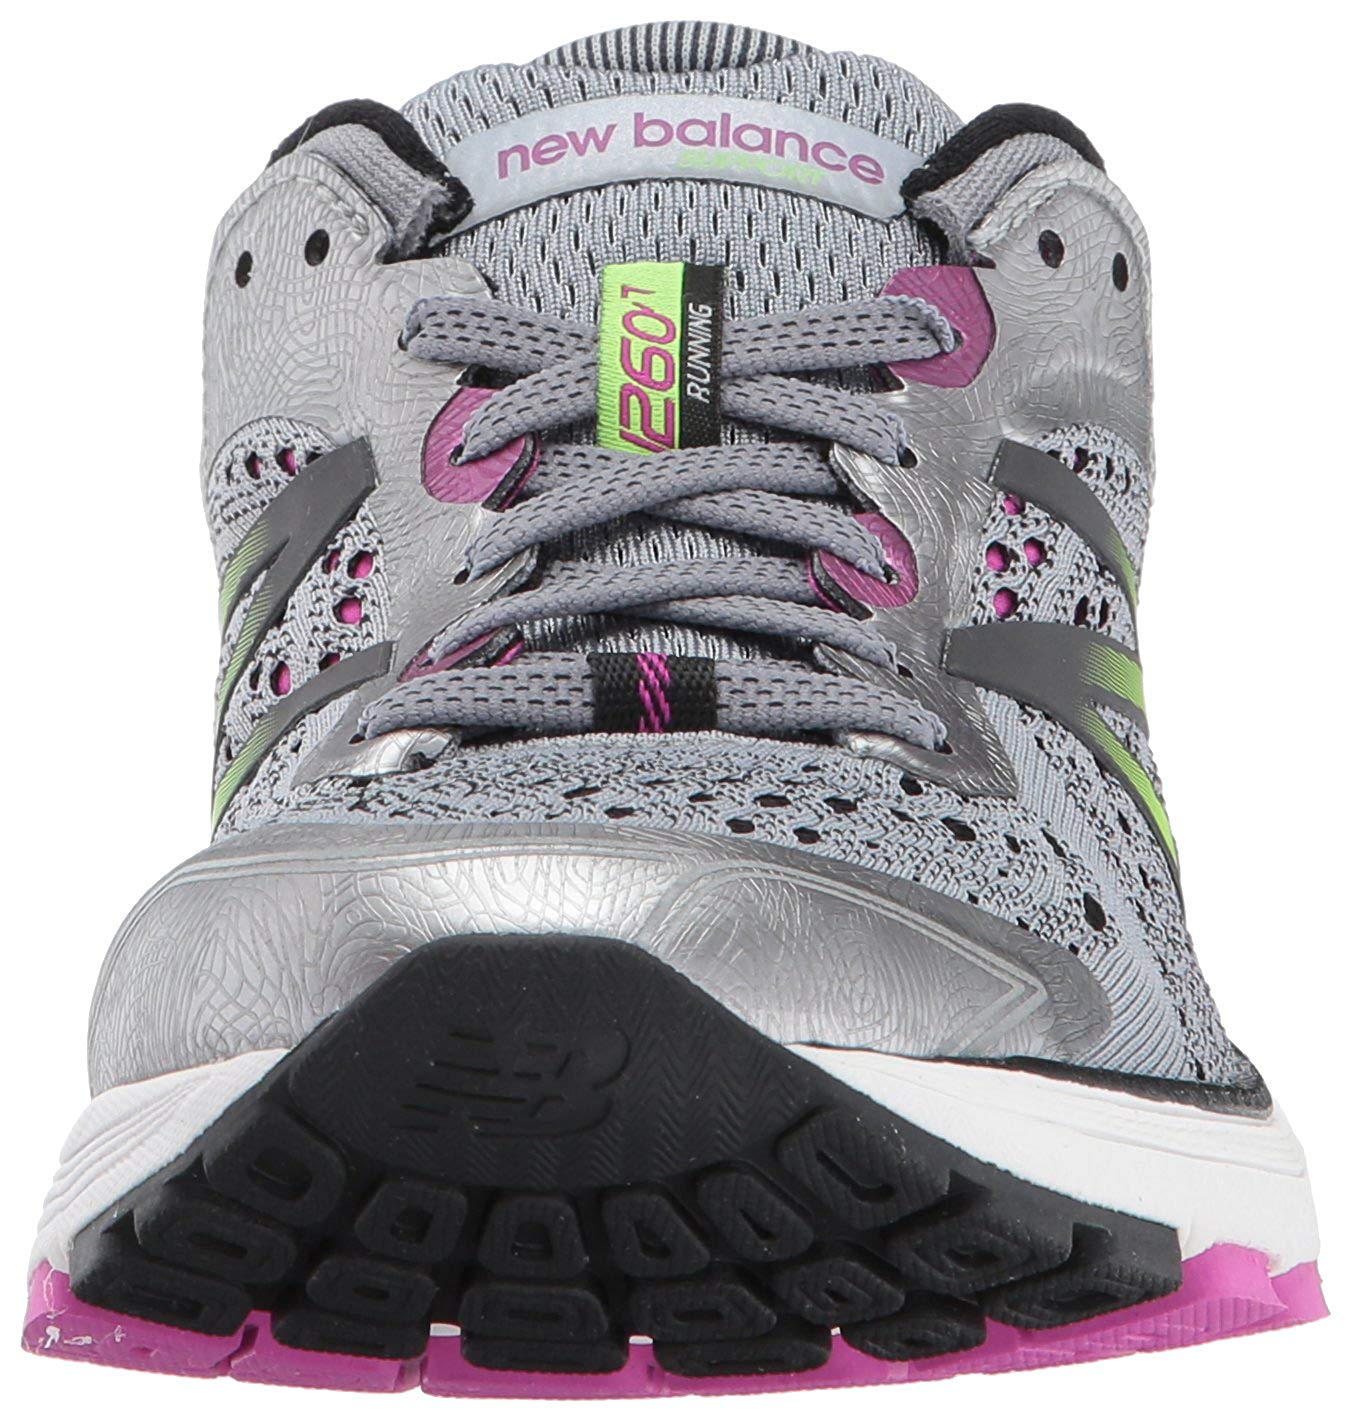 New Balance Women's 1260v7 Running Shoe, Dark Grey/Purple, Size 9.0 ...